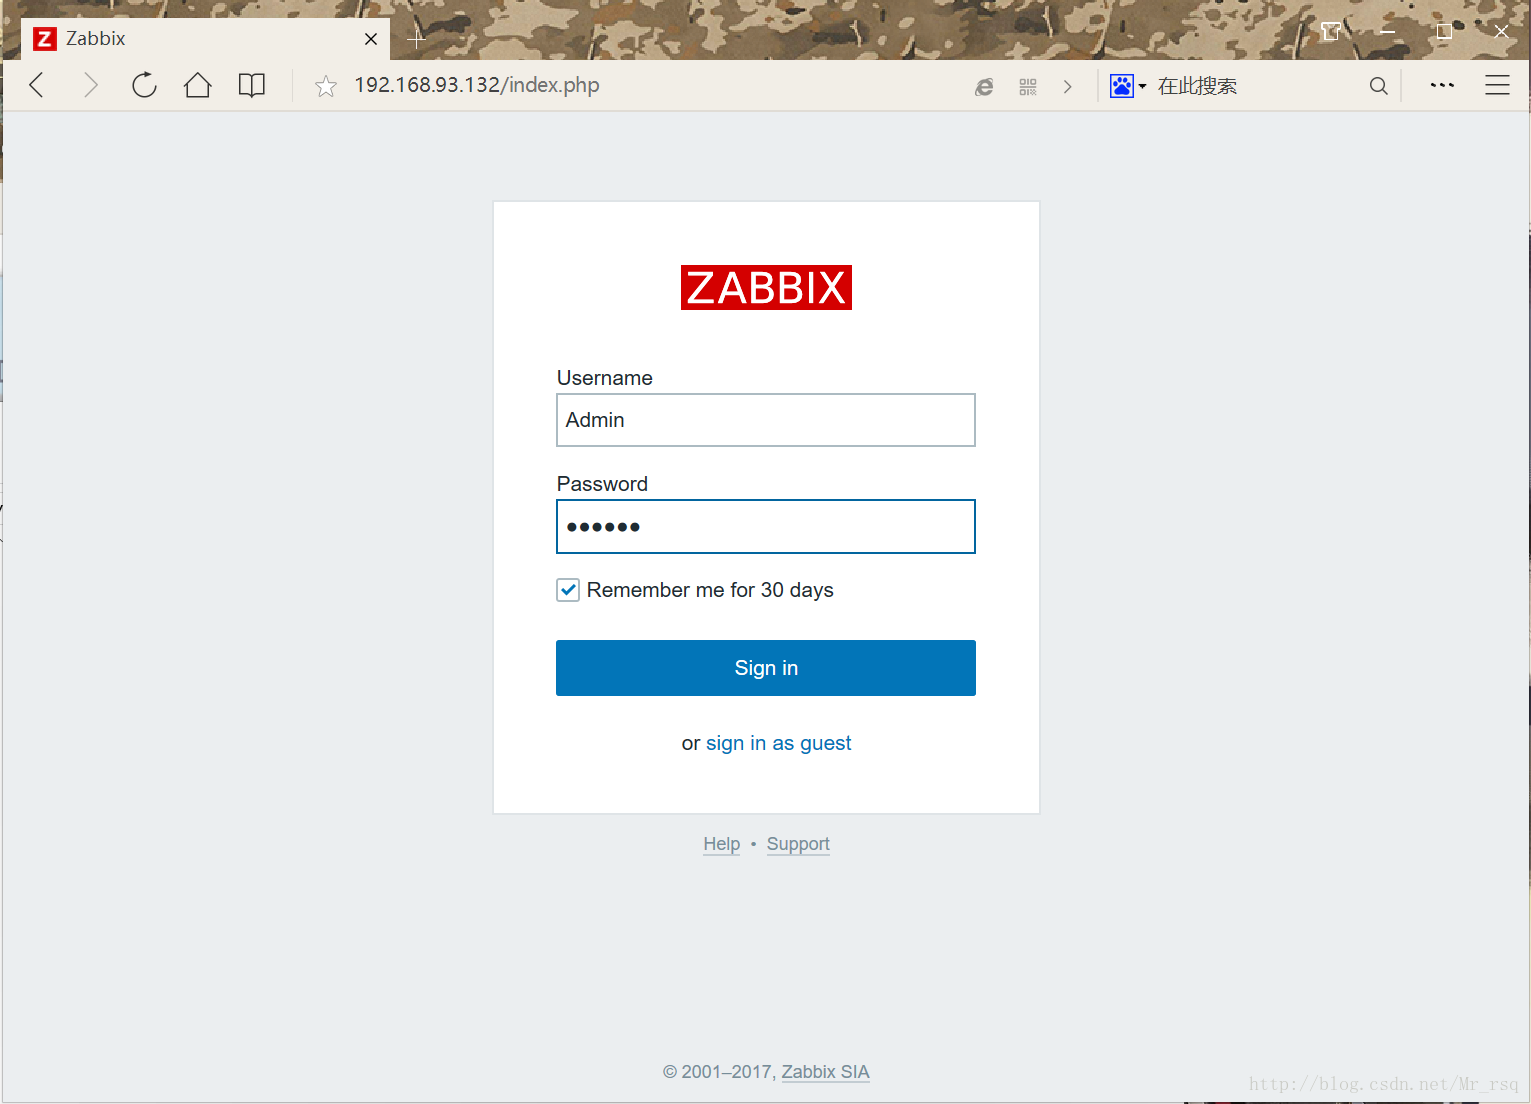 Centos 7 下的 Zabbix3.4 安装步骤详解